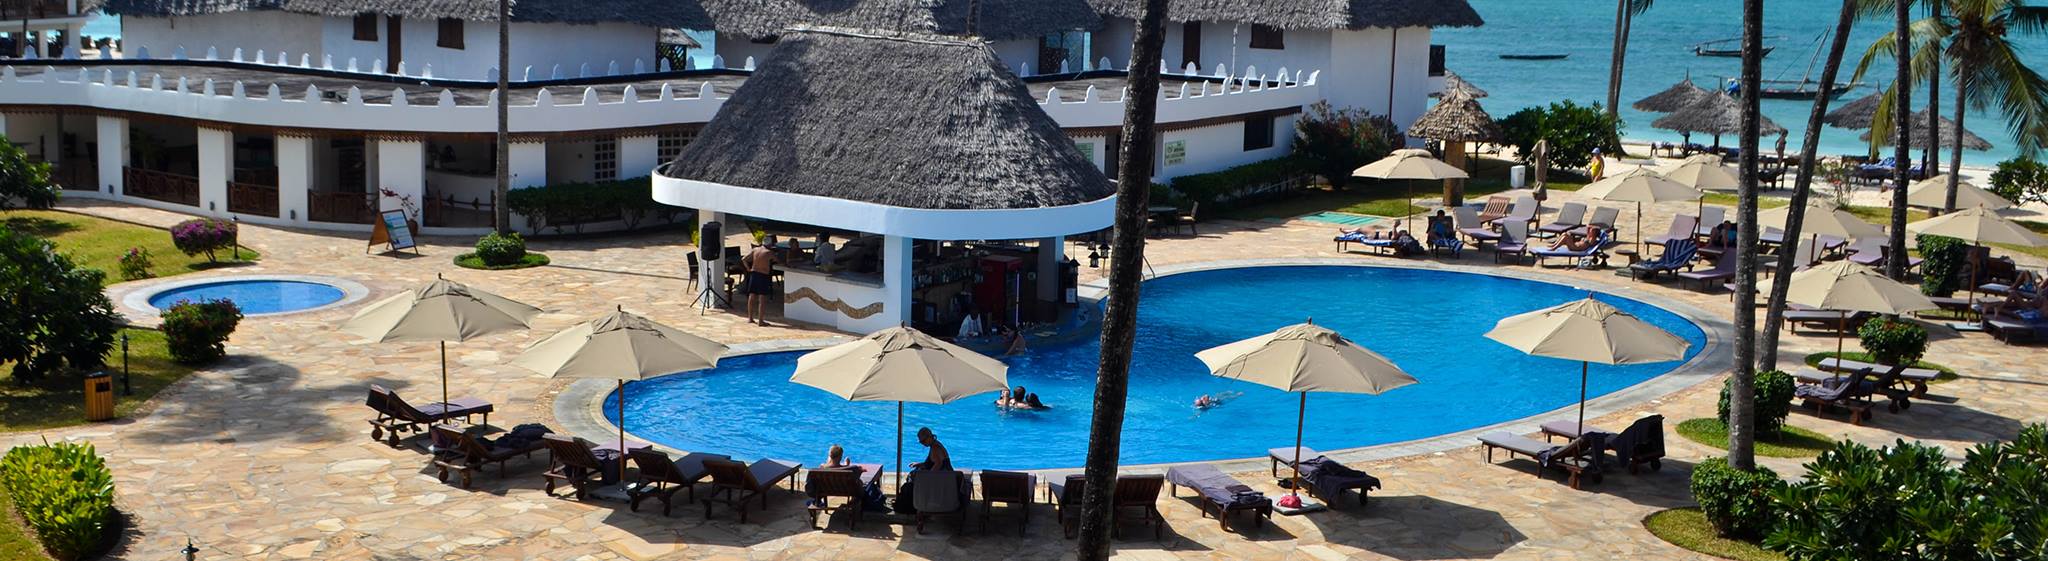 DoubleTree Resort by Hilton Hotel Zanzibar - Nungwi - Safanta Tours & Travel Company Limited